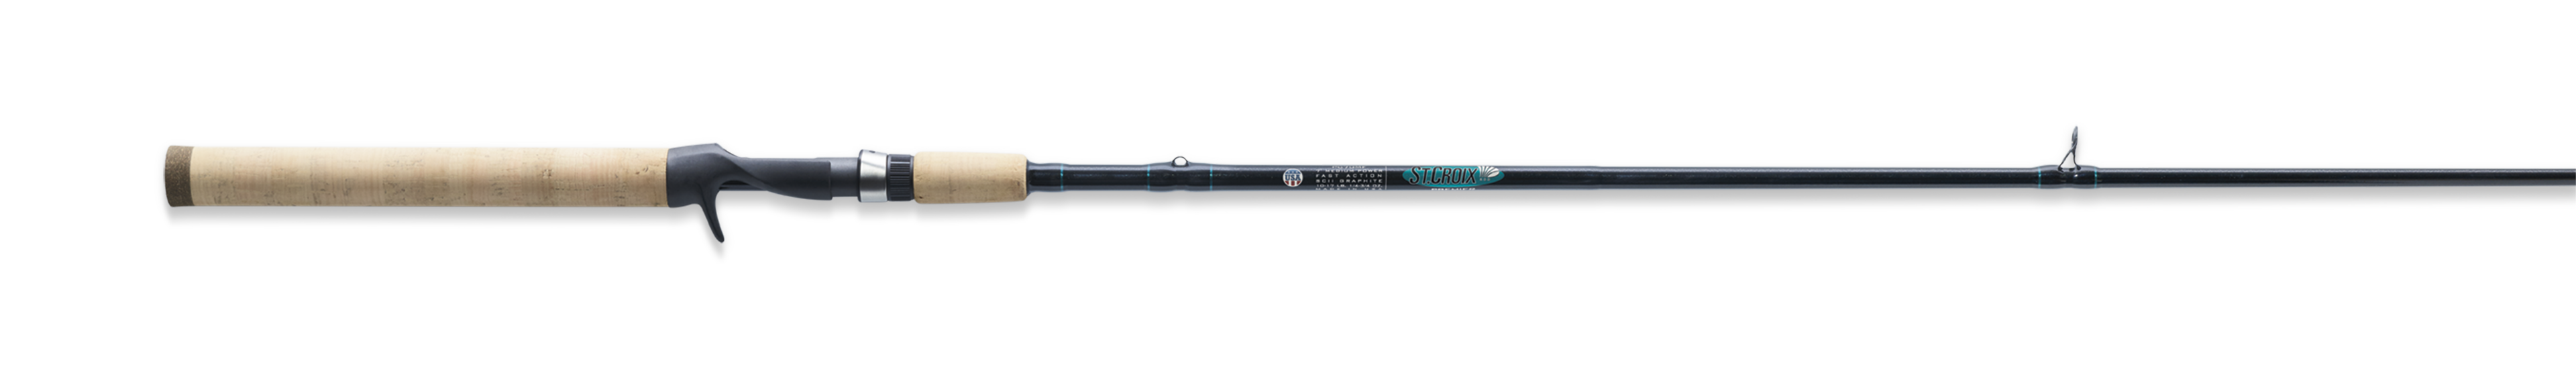 Premier Carbon Fiber Fast Action Rod- The PREMIER Rod is designed